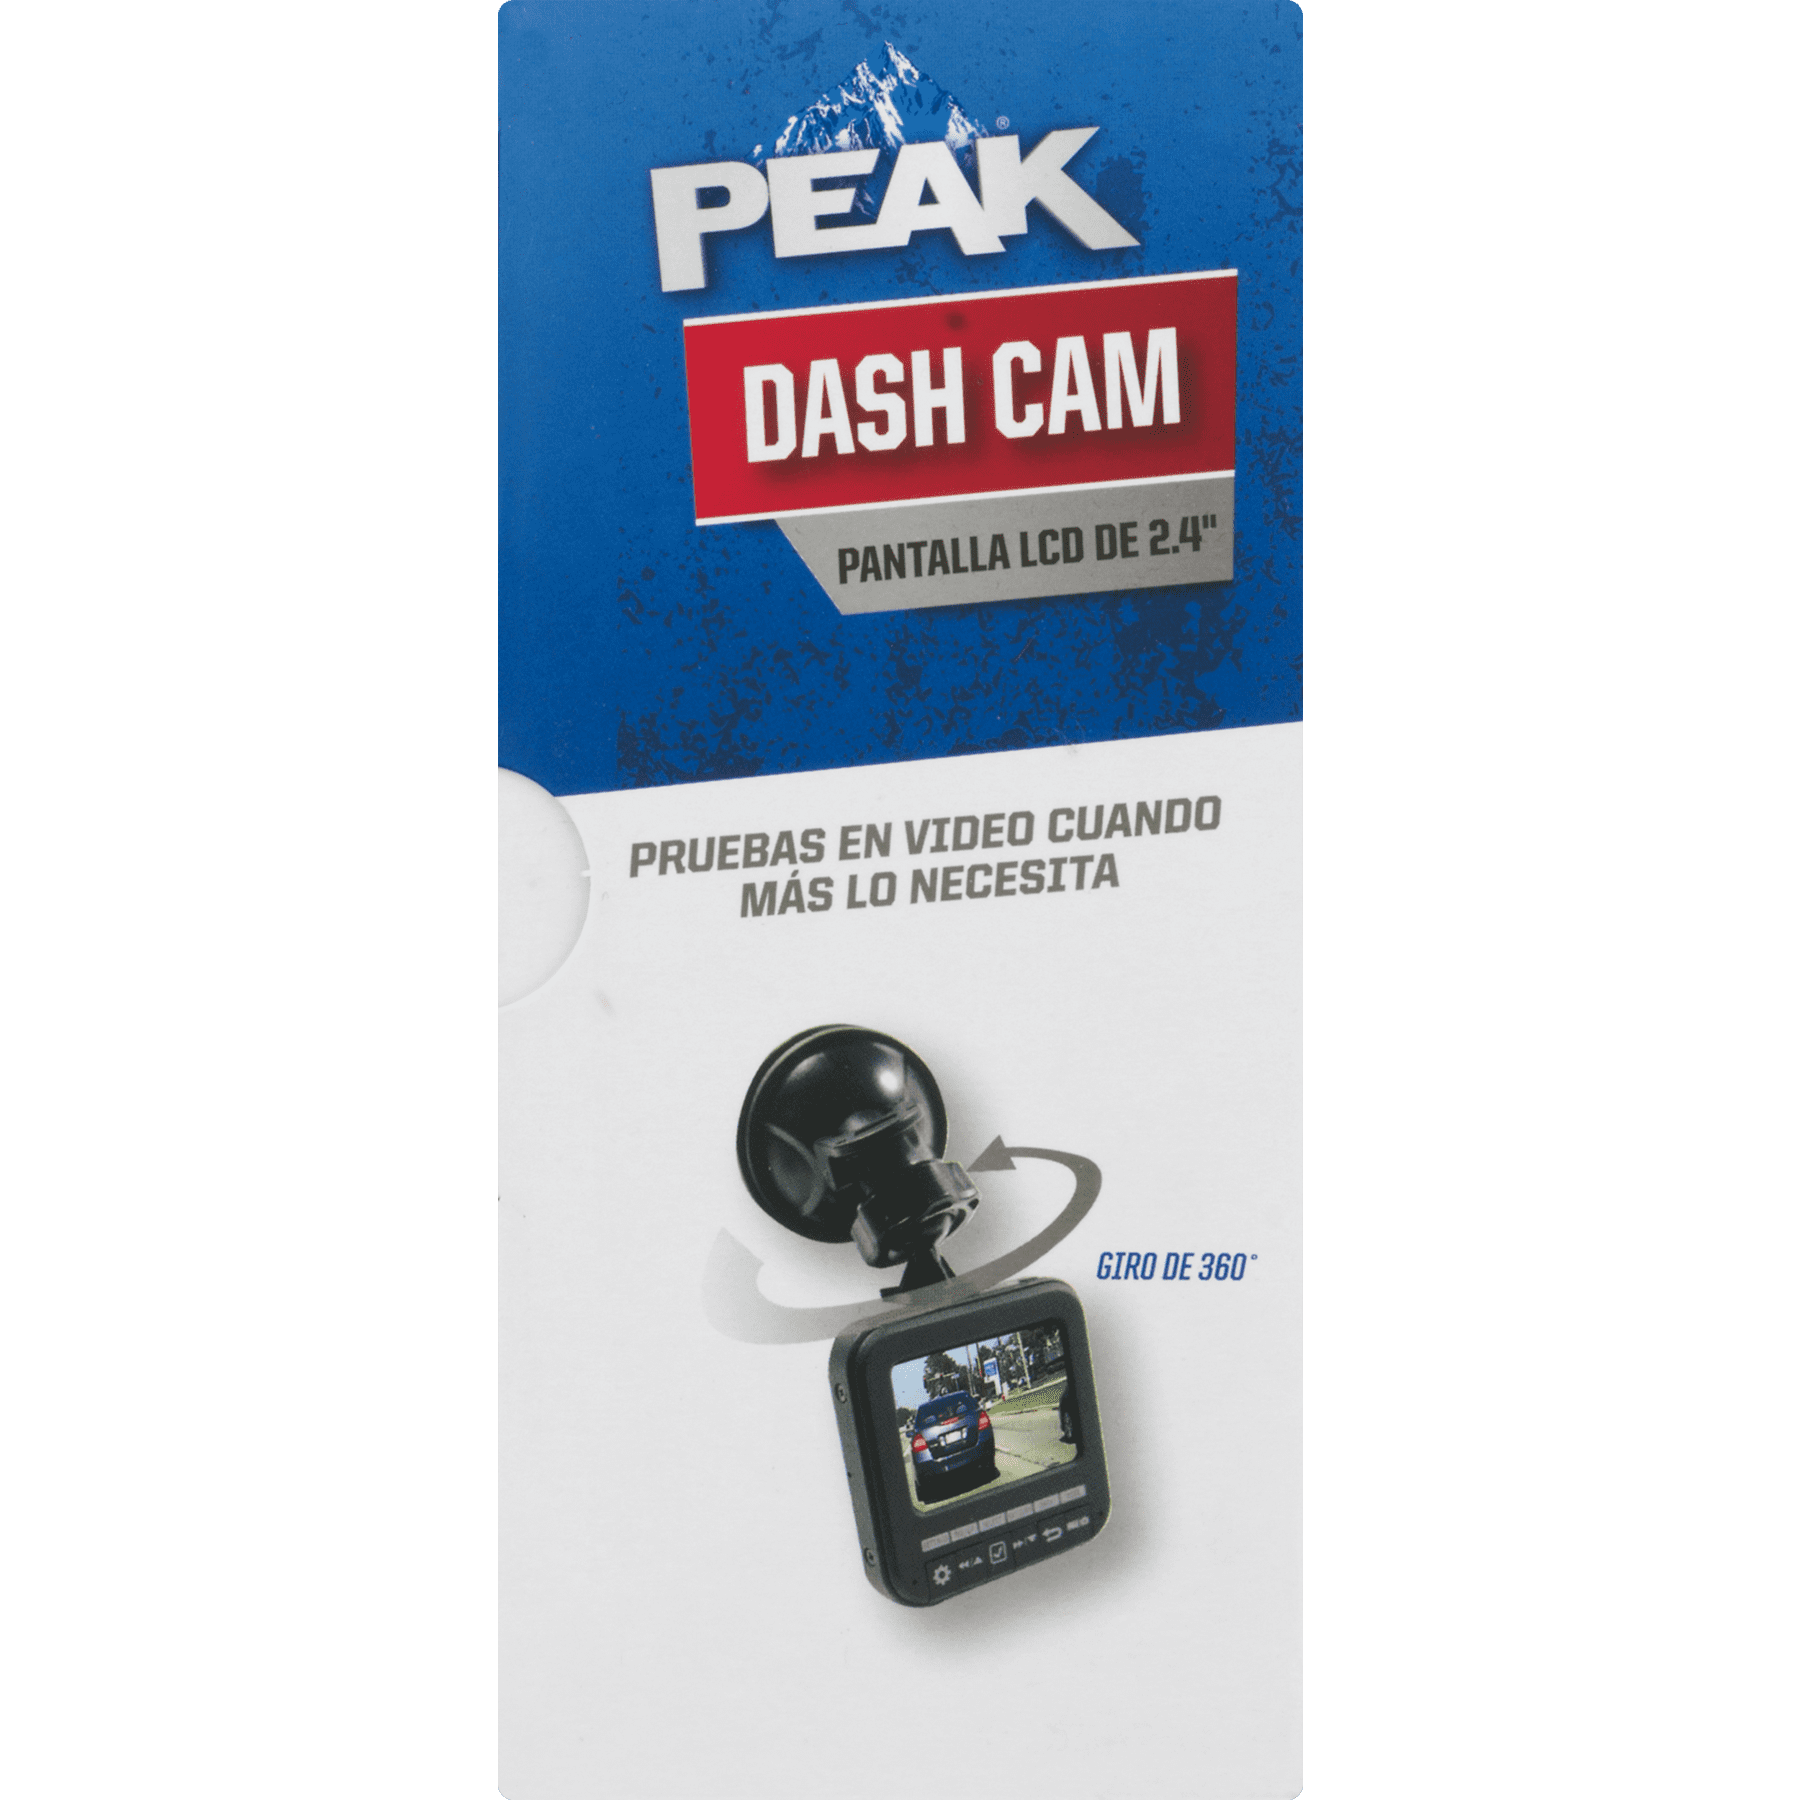 PEAK LED Dash Cam, 2.4 Color LCD Monitor